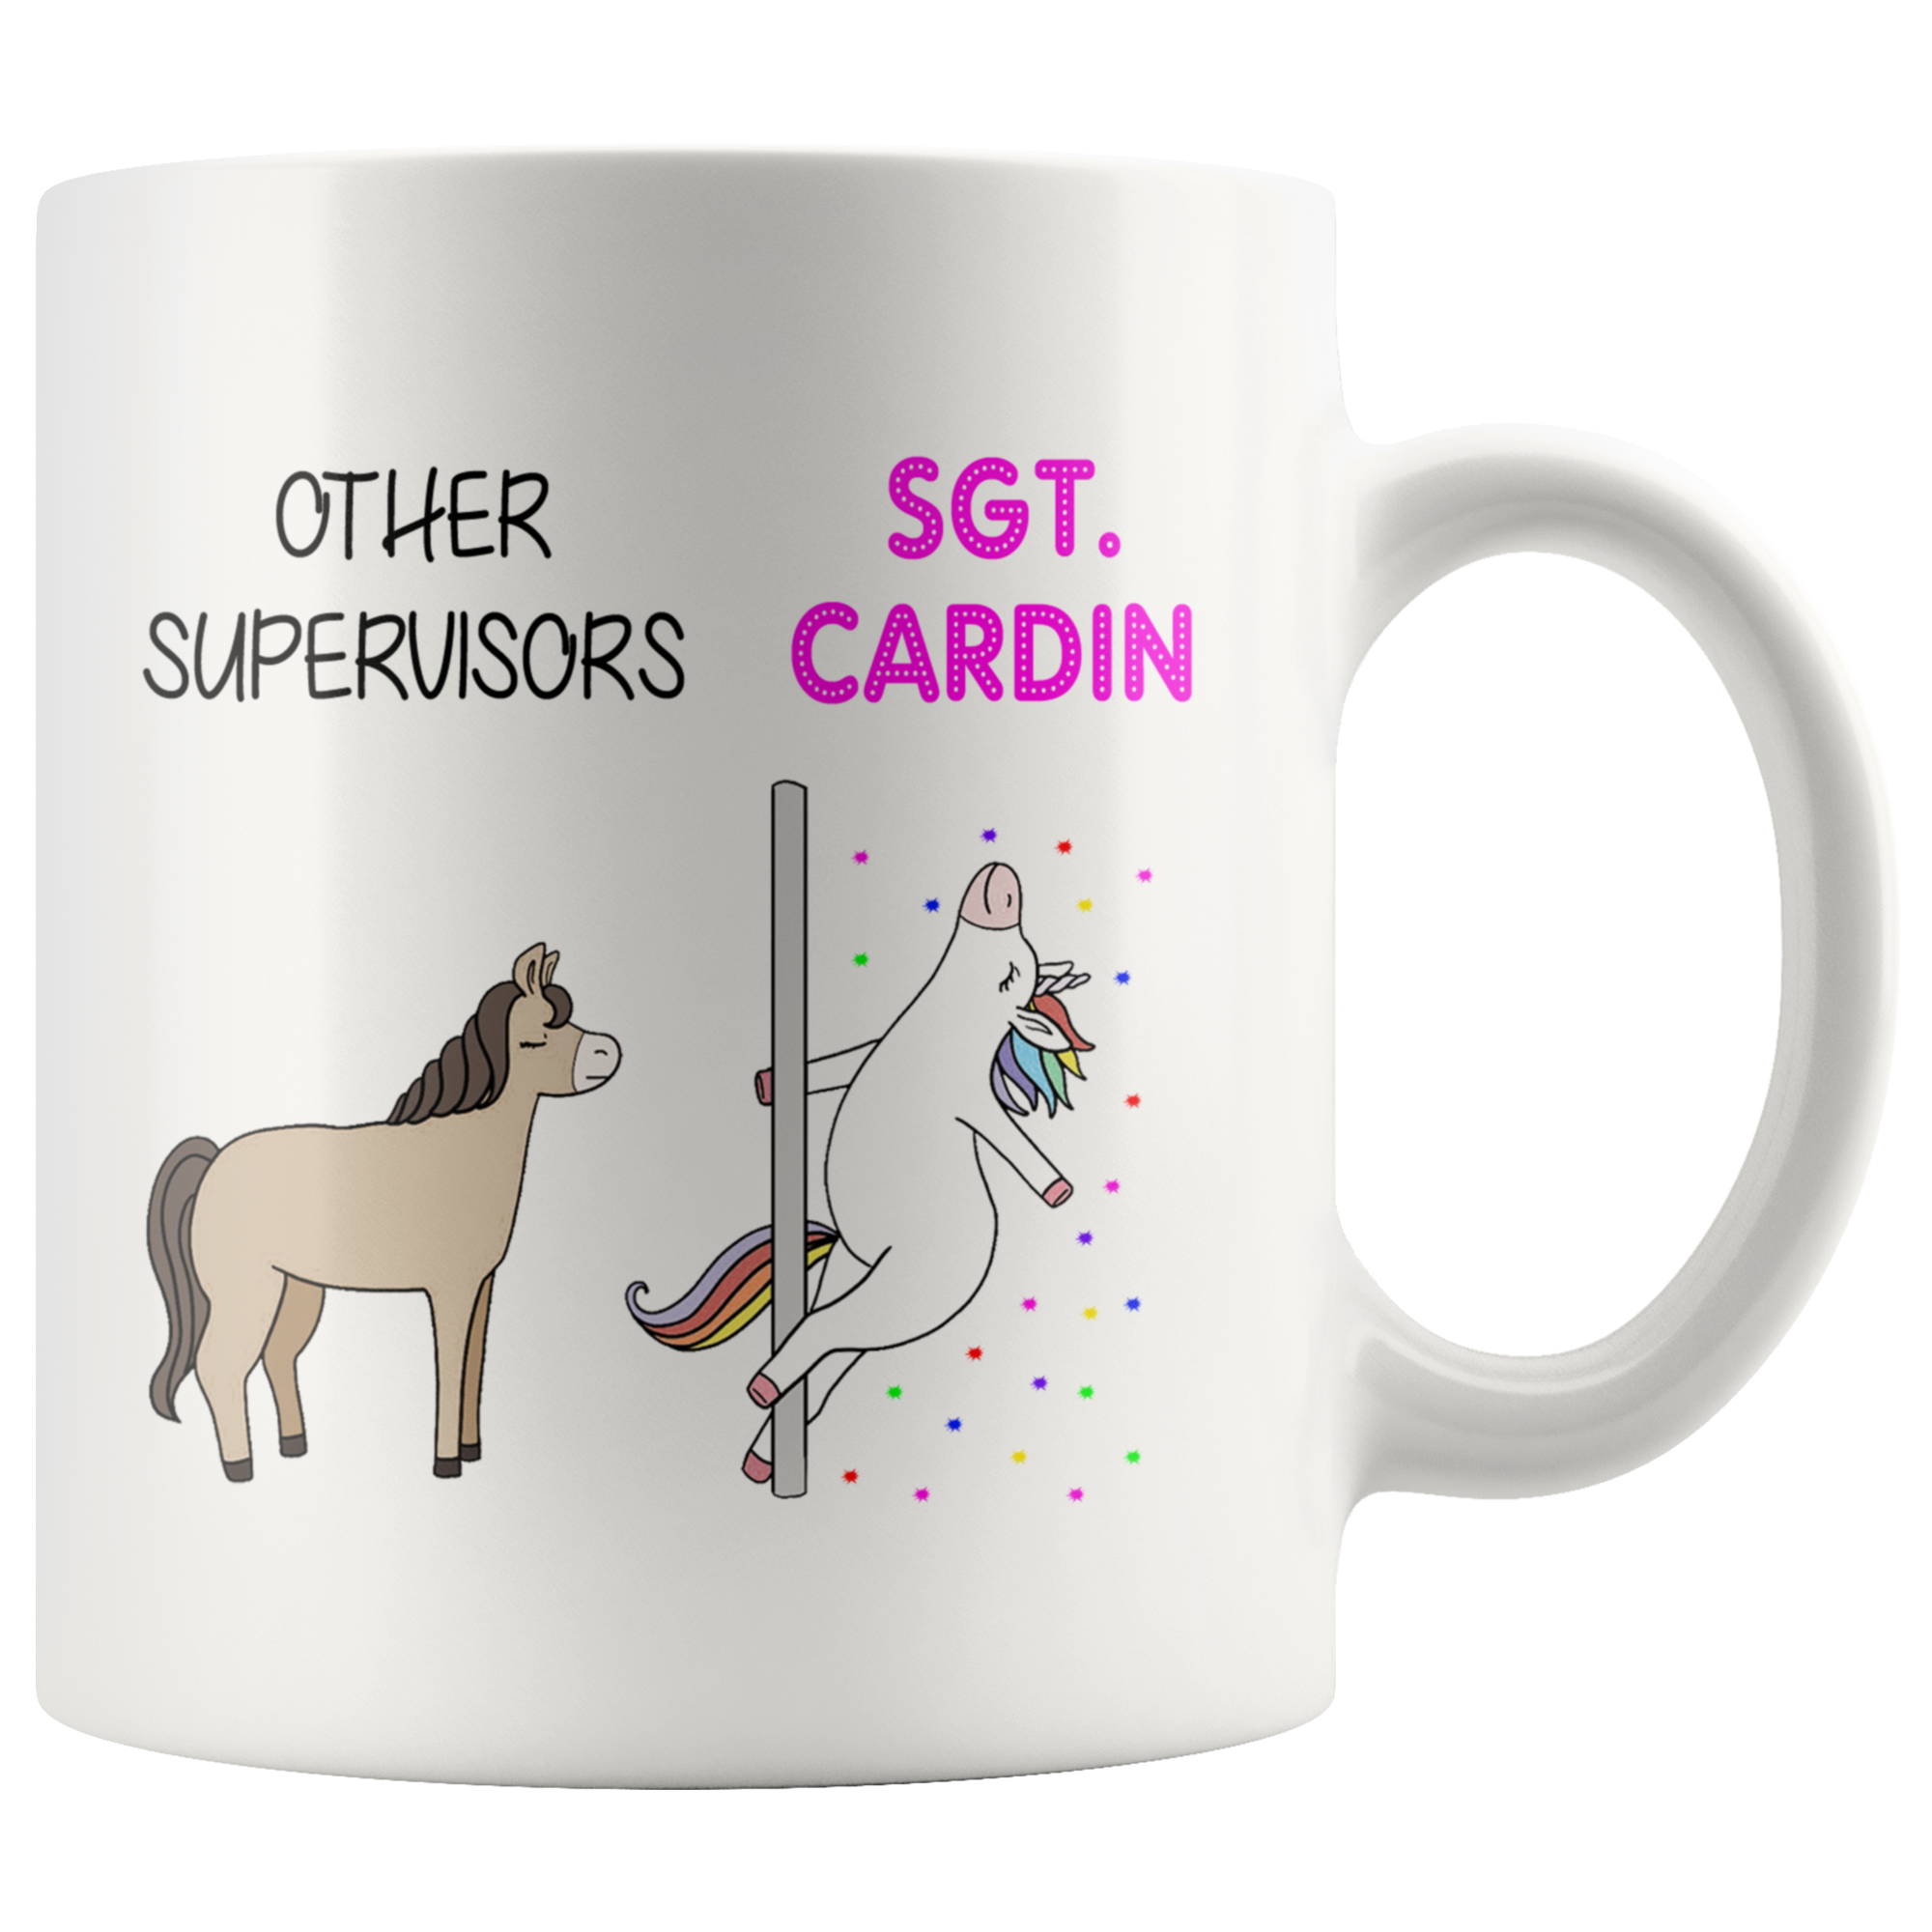 SGT CARDIN - 18TH